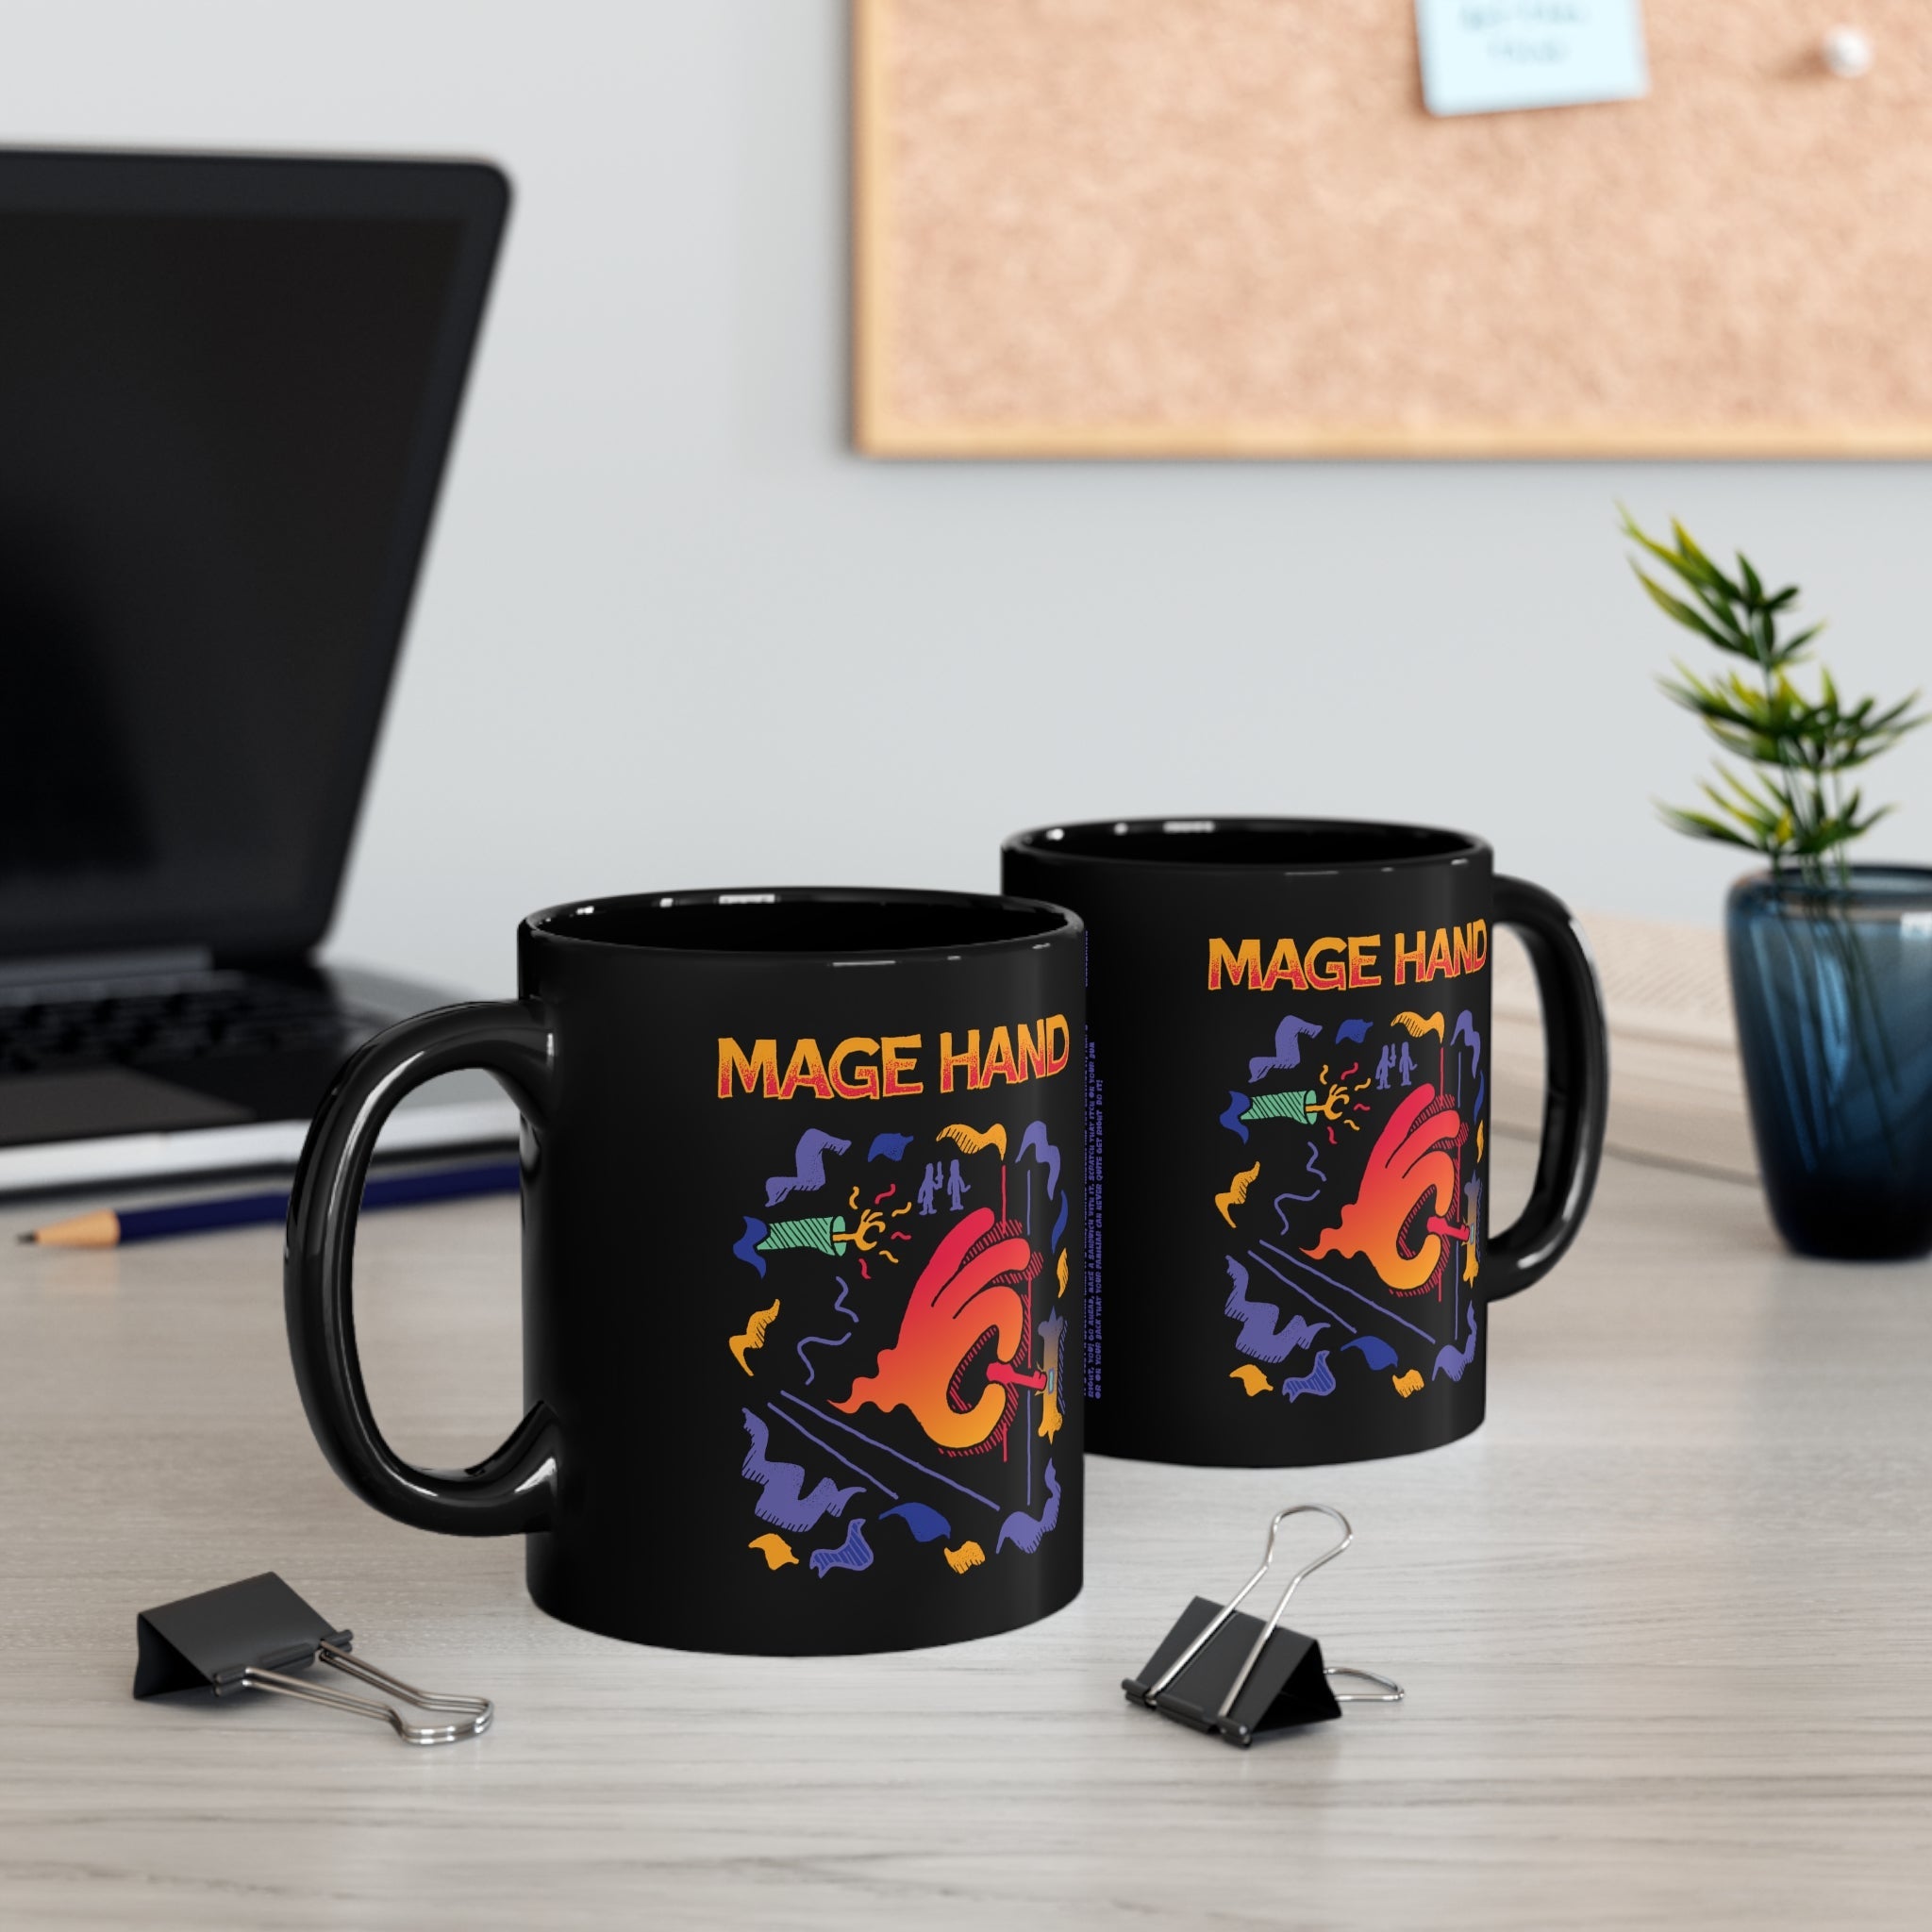 Mage Hand | Black Mug 11oz - Mug - Ace of Gnomes - 22020896280218381464